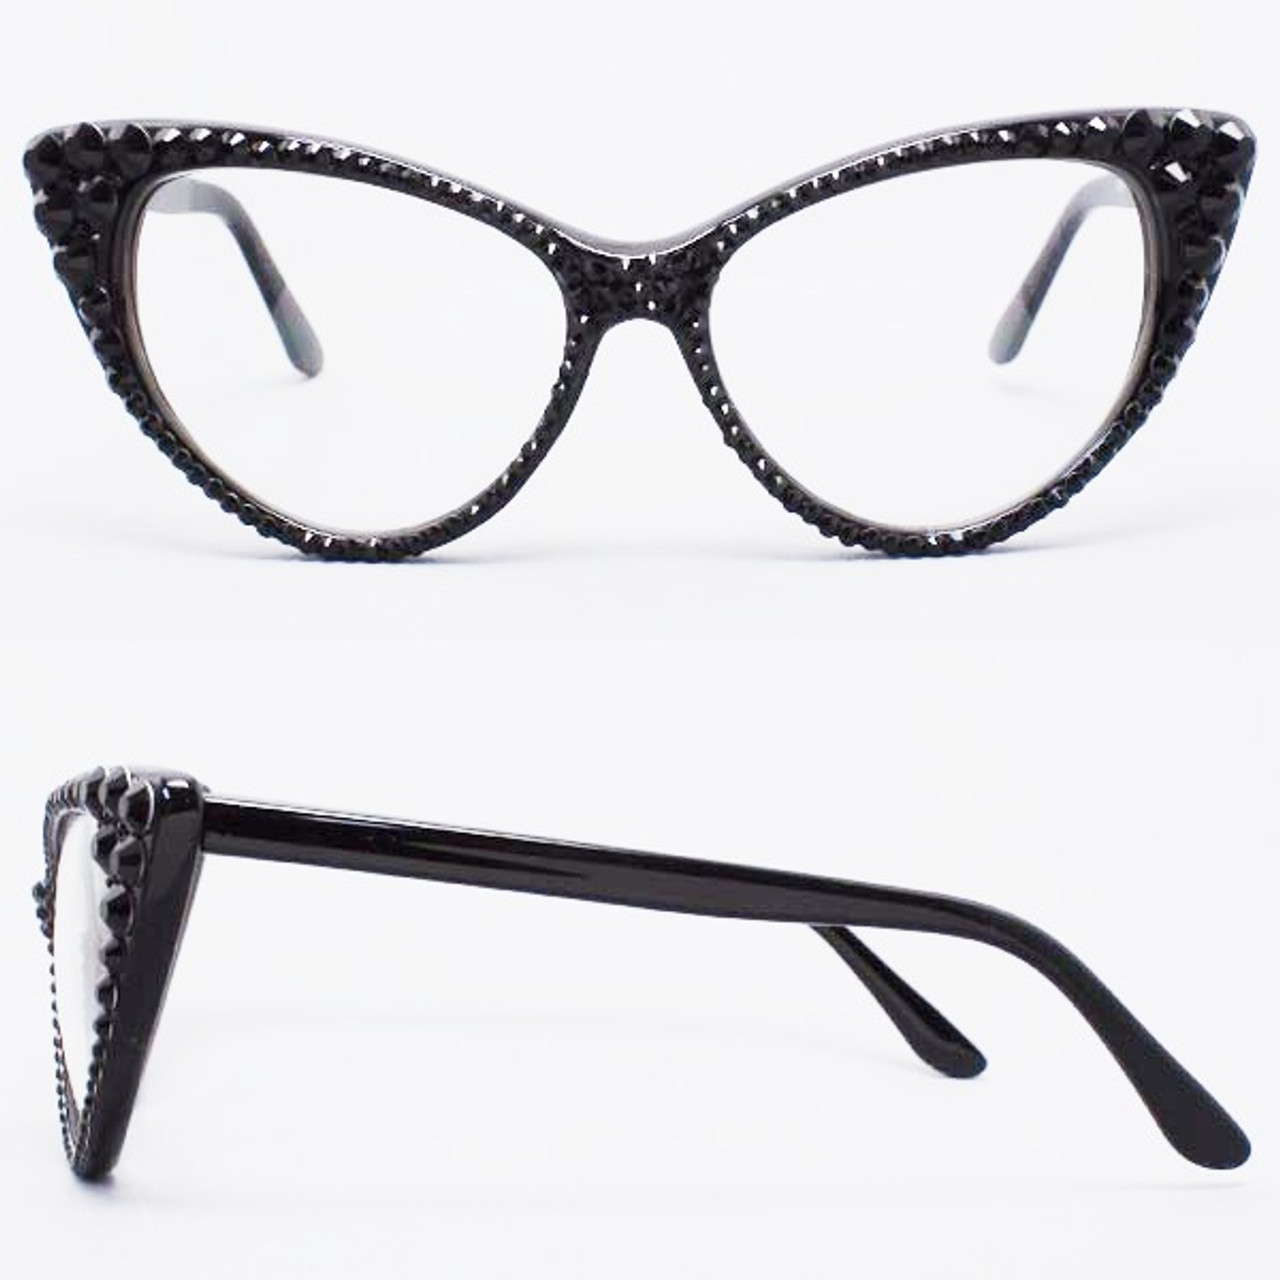 1407 Cat Eye Glasses in Black on Crystal